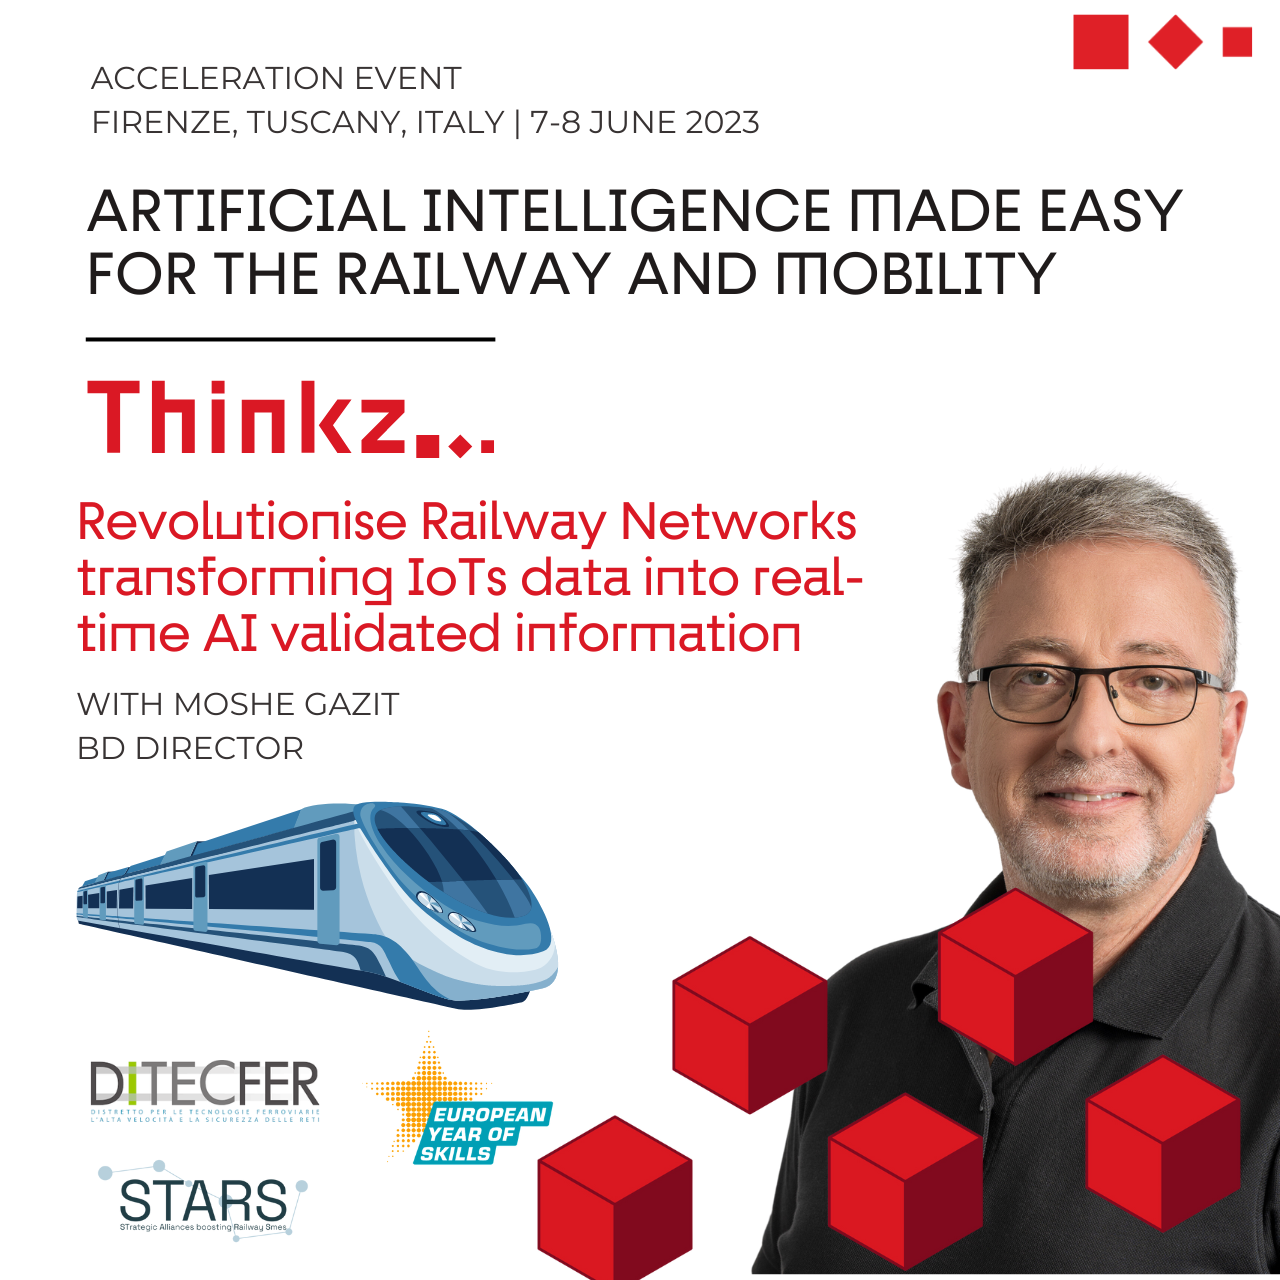 Thinkz IoT AI Acceleration event Firenze Train RailWay